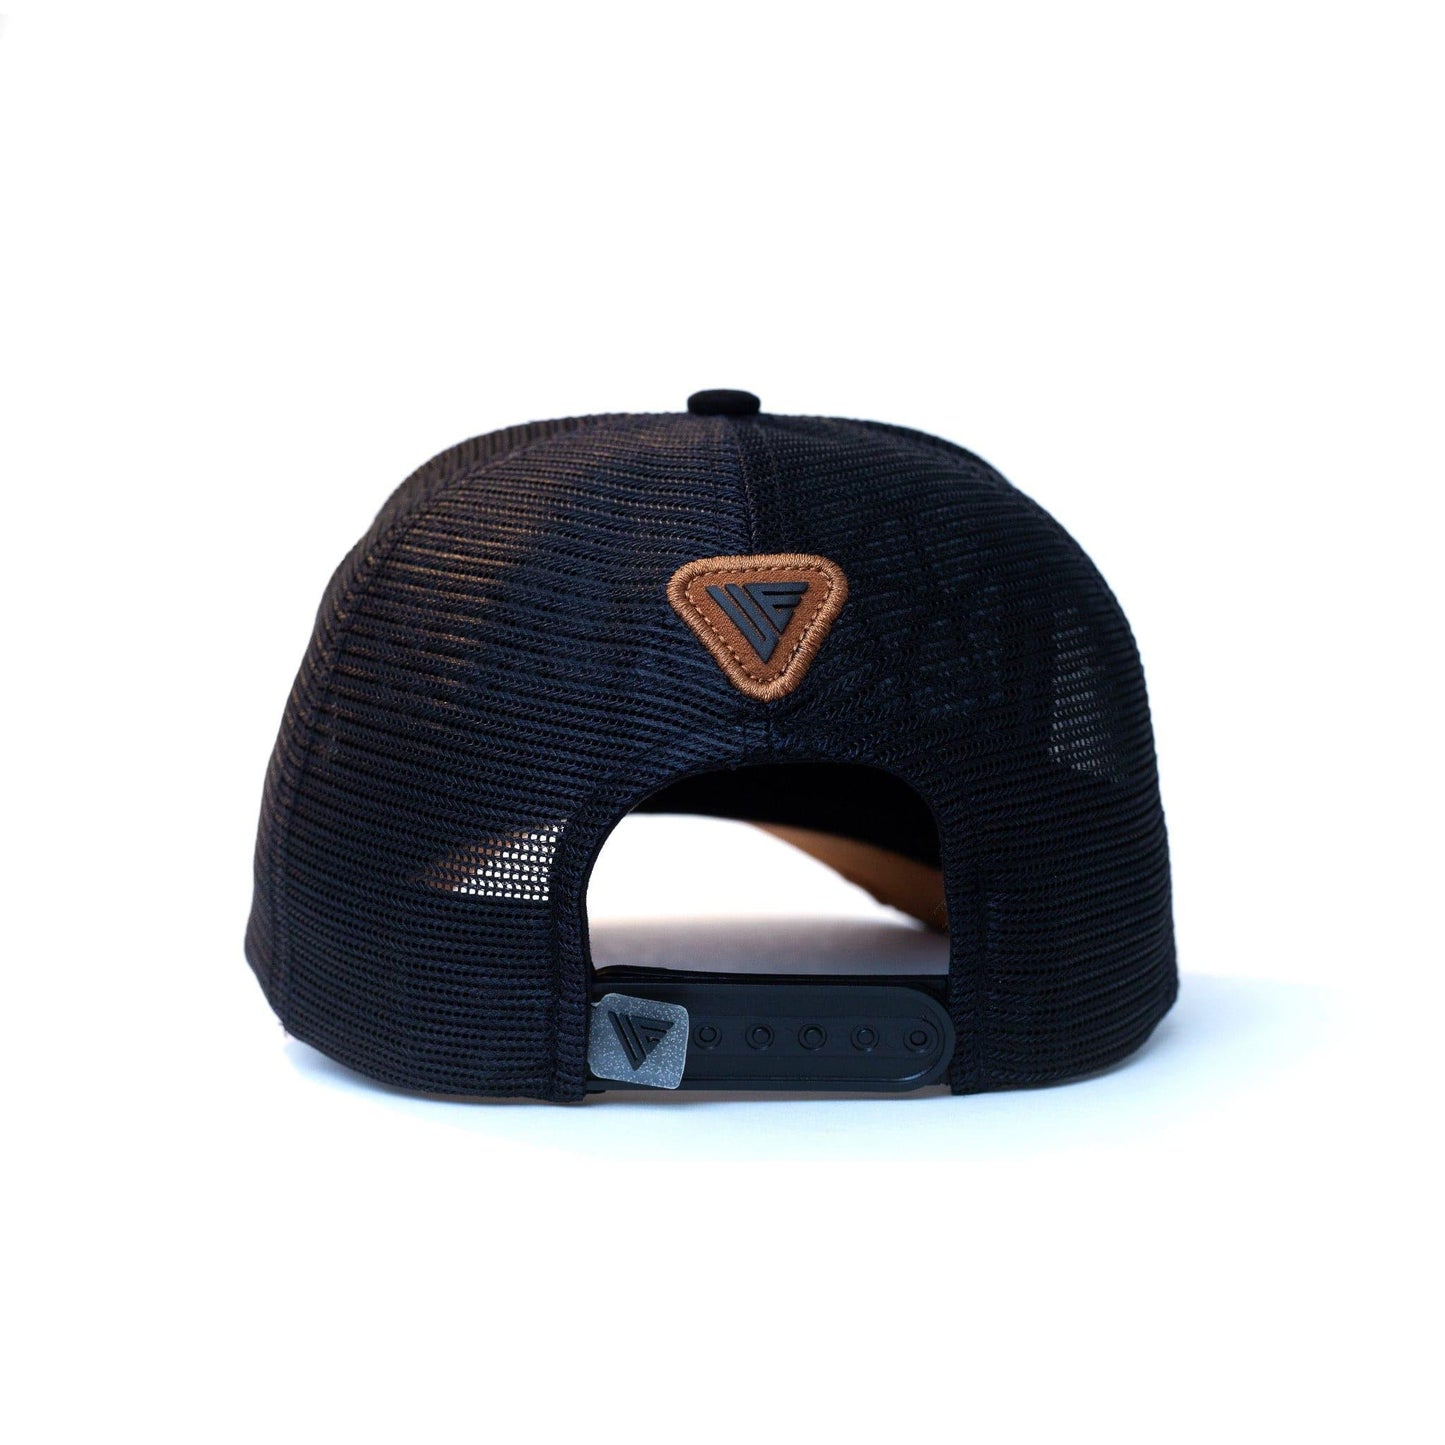 Black Trucker Hat | Original's | Urban Effort - Urban Effort